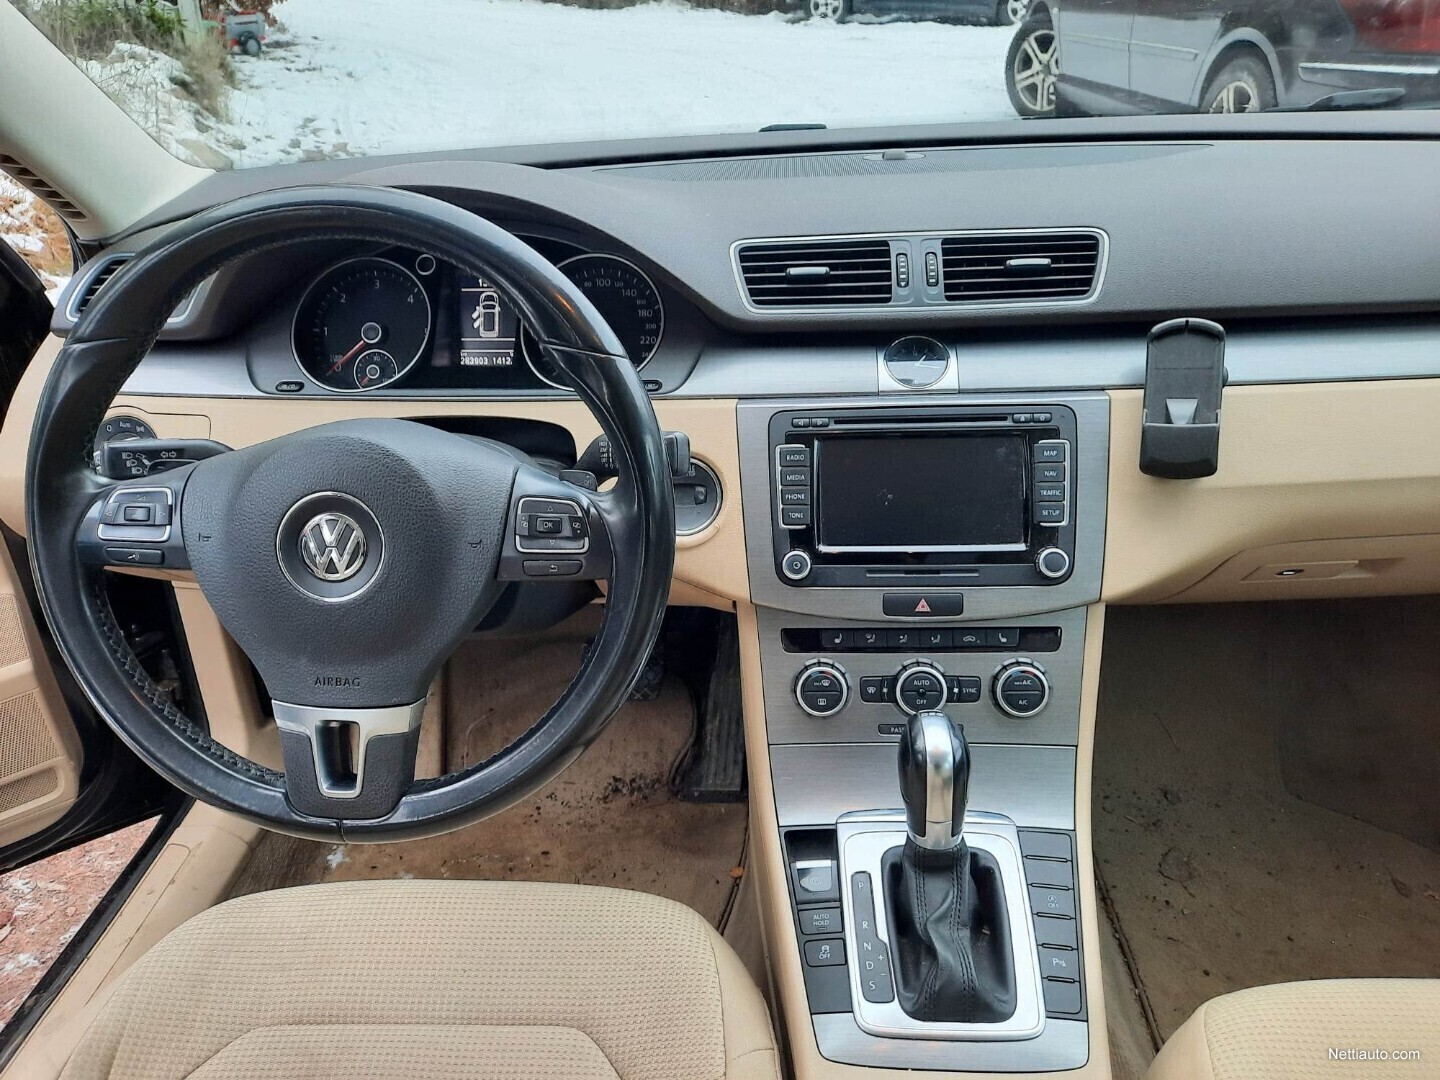 Volkswagen Passat Variant 2,0 TDI 103 kW (140 hv) BMT Highline Station  Wagon 2013 - Used vehicle - Nettiauto